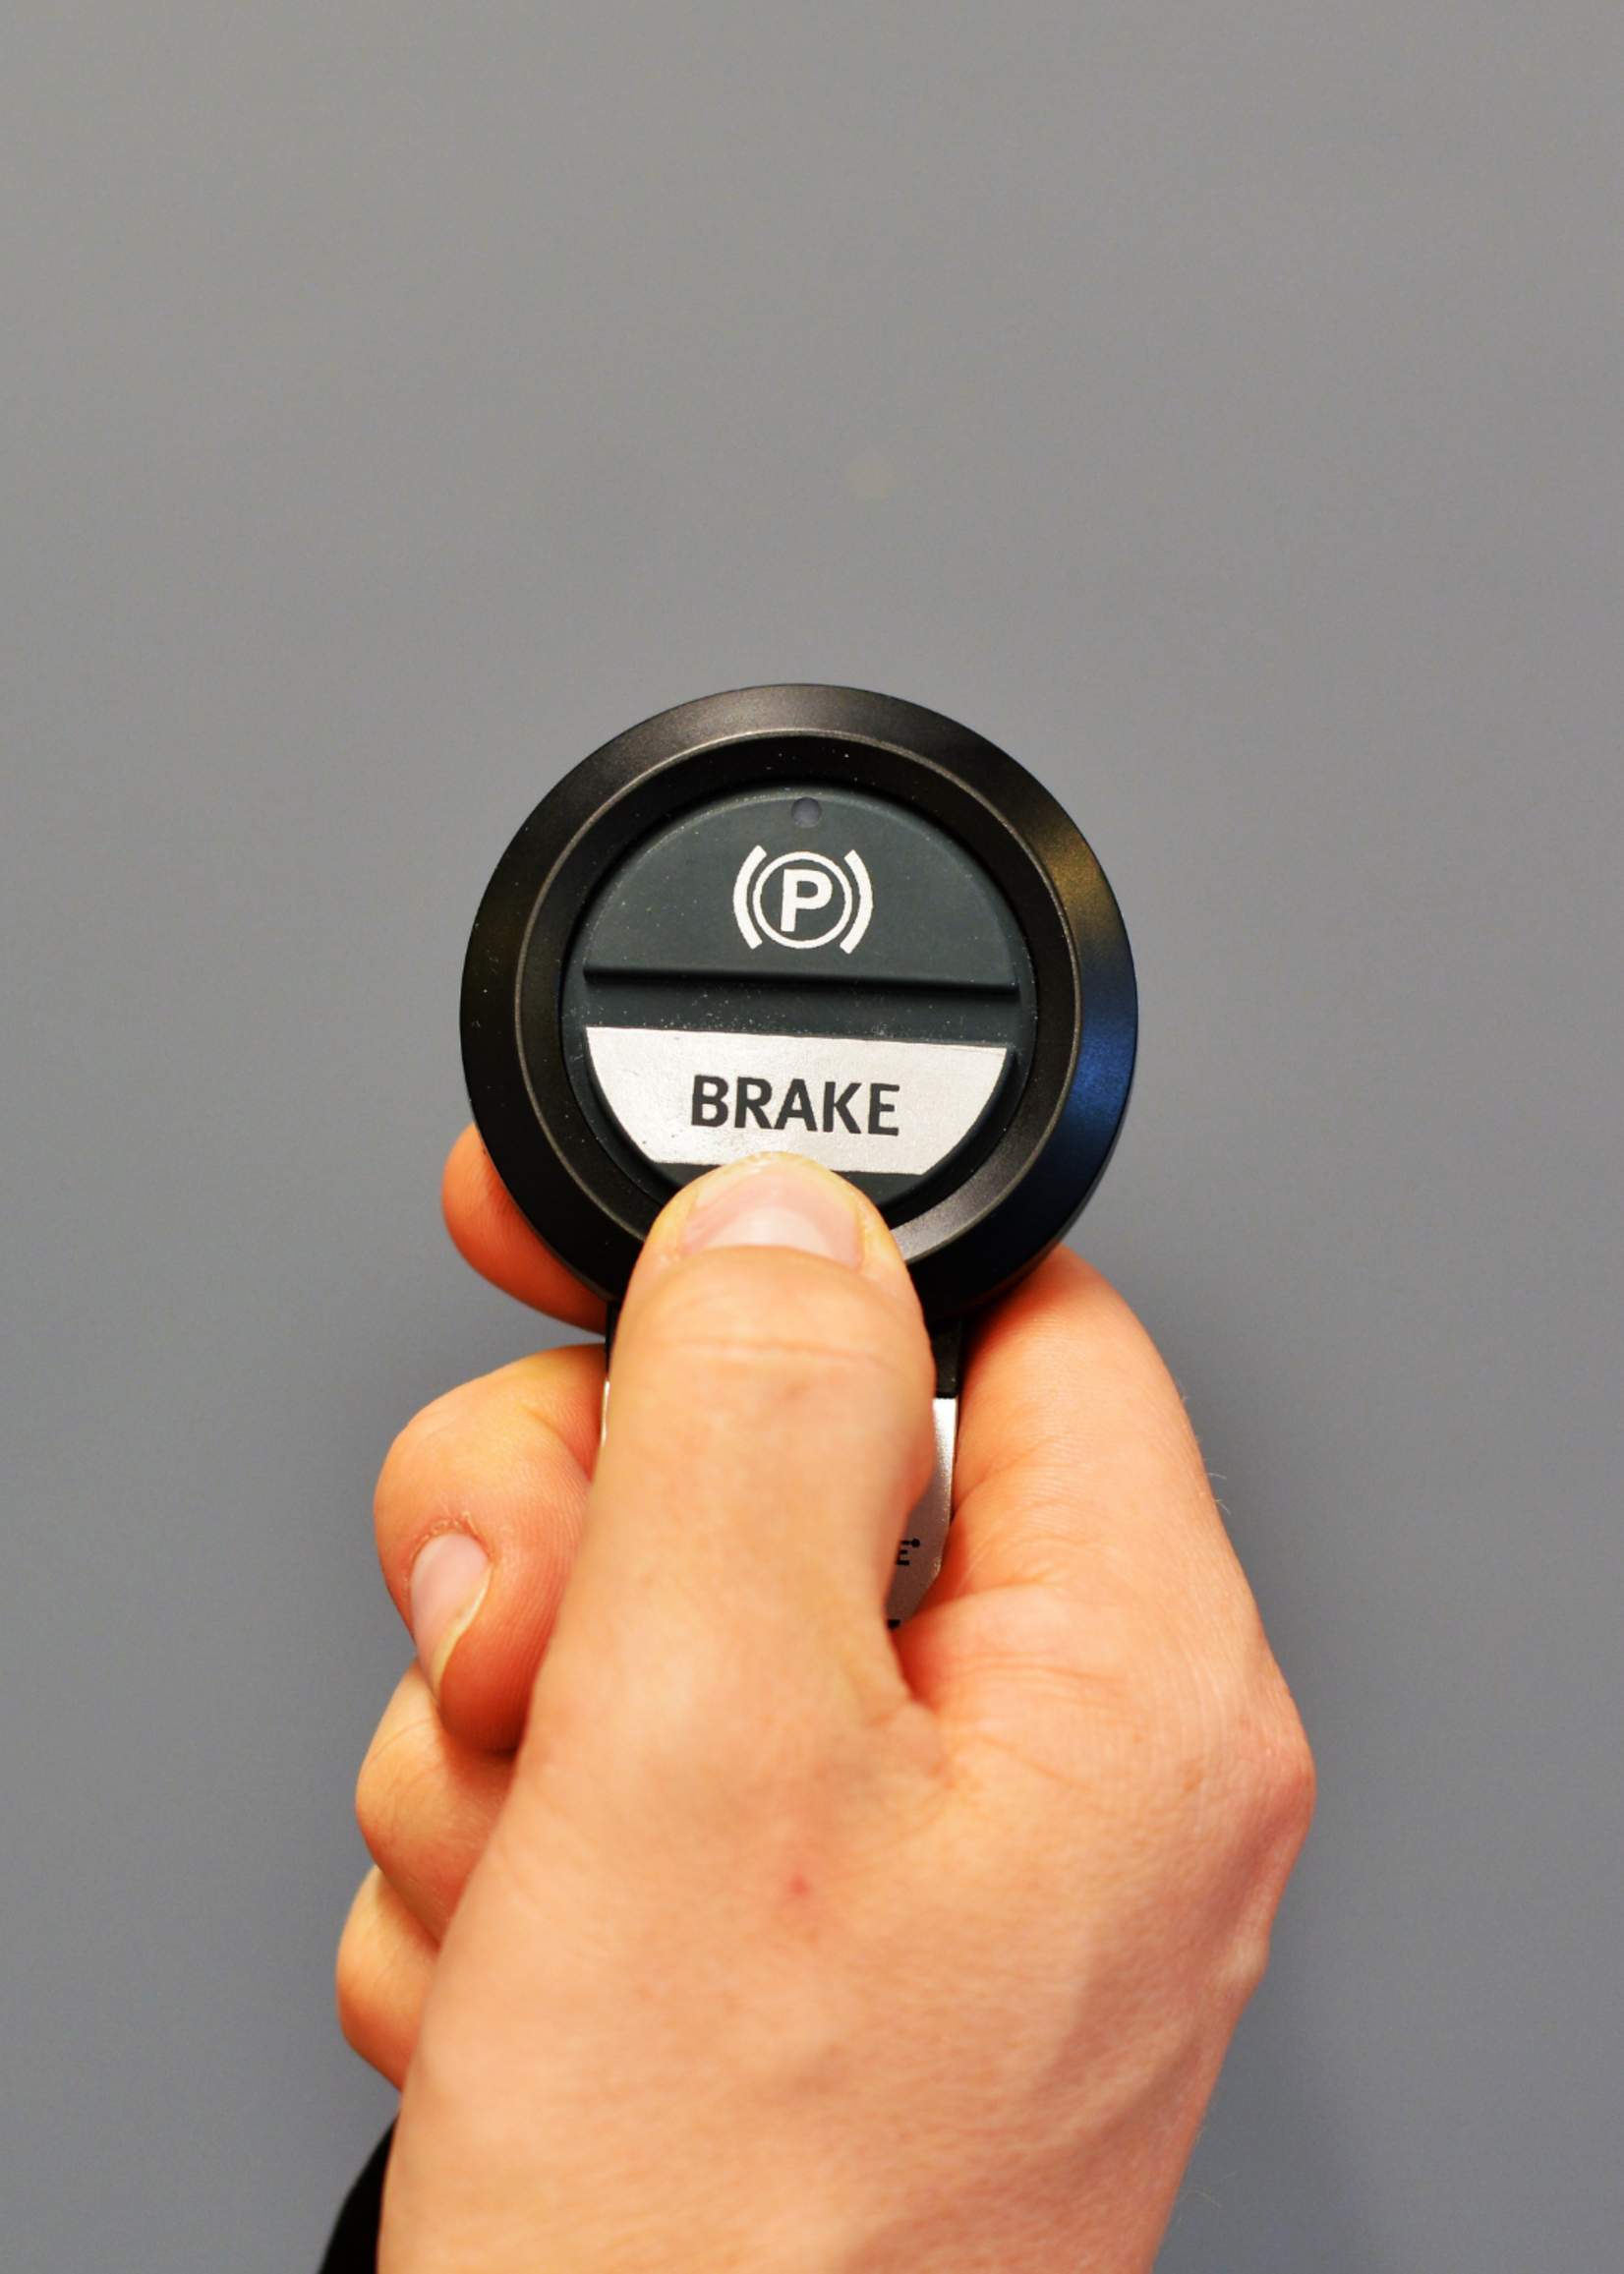 Smart Brake Smart Brake Controller - Hand Remote Control